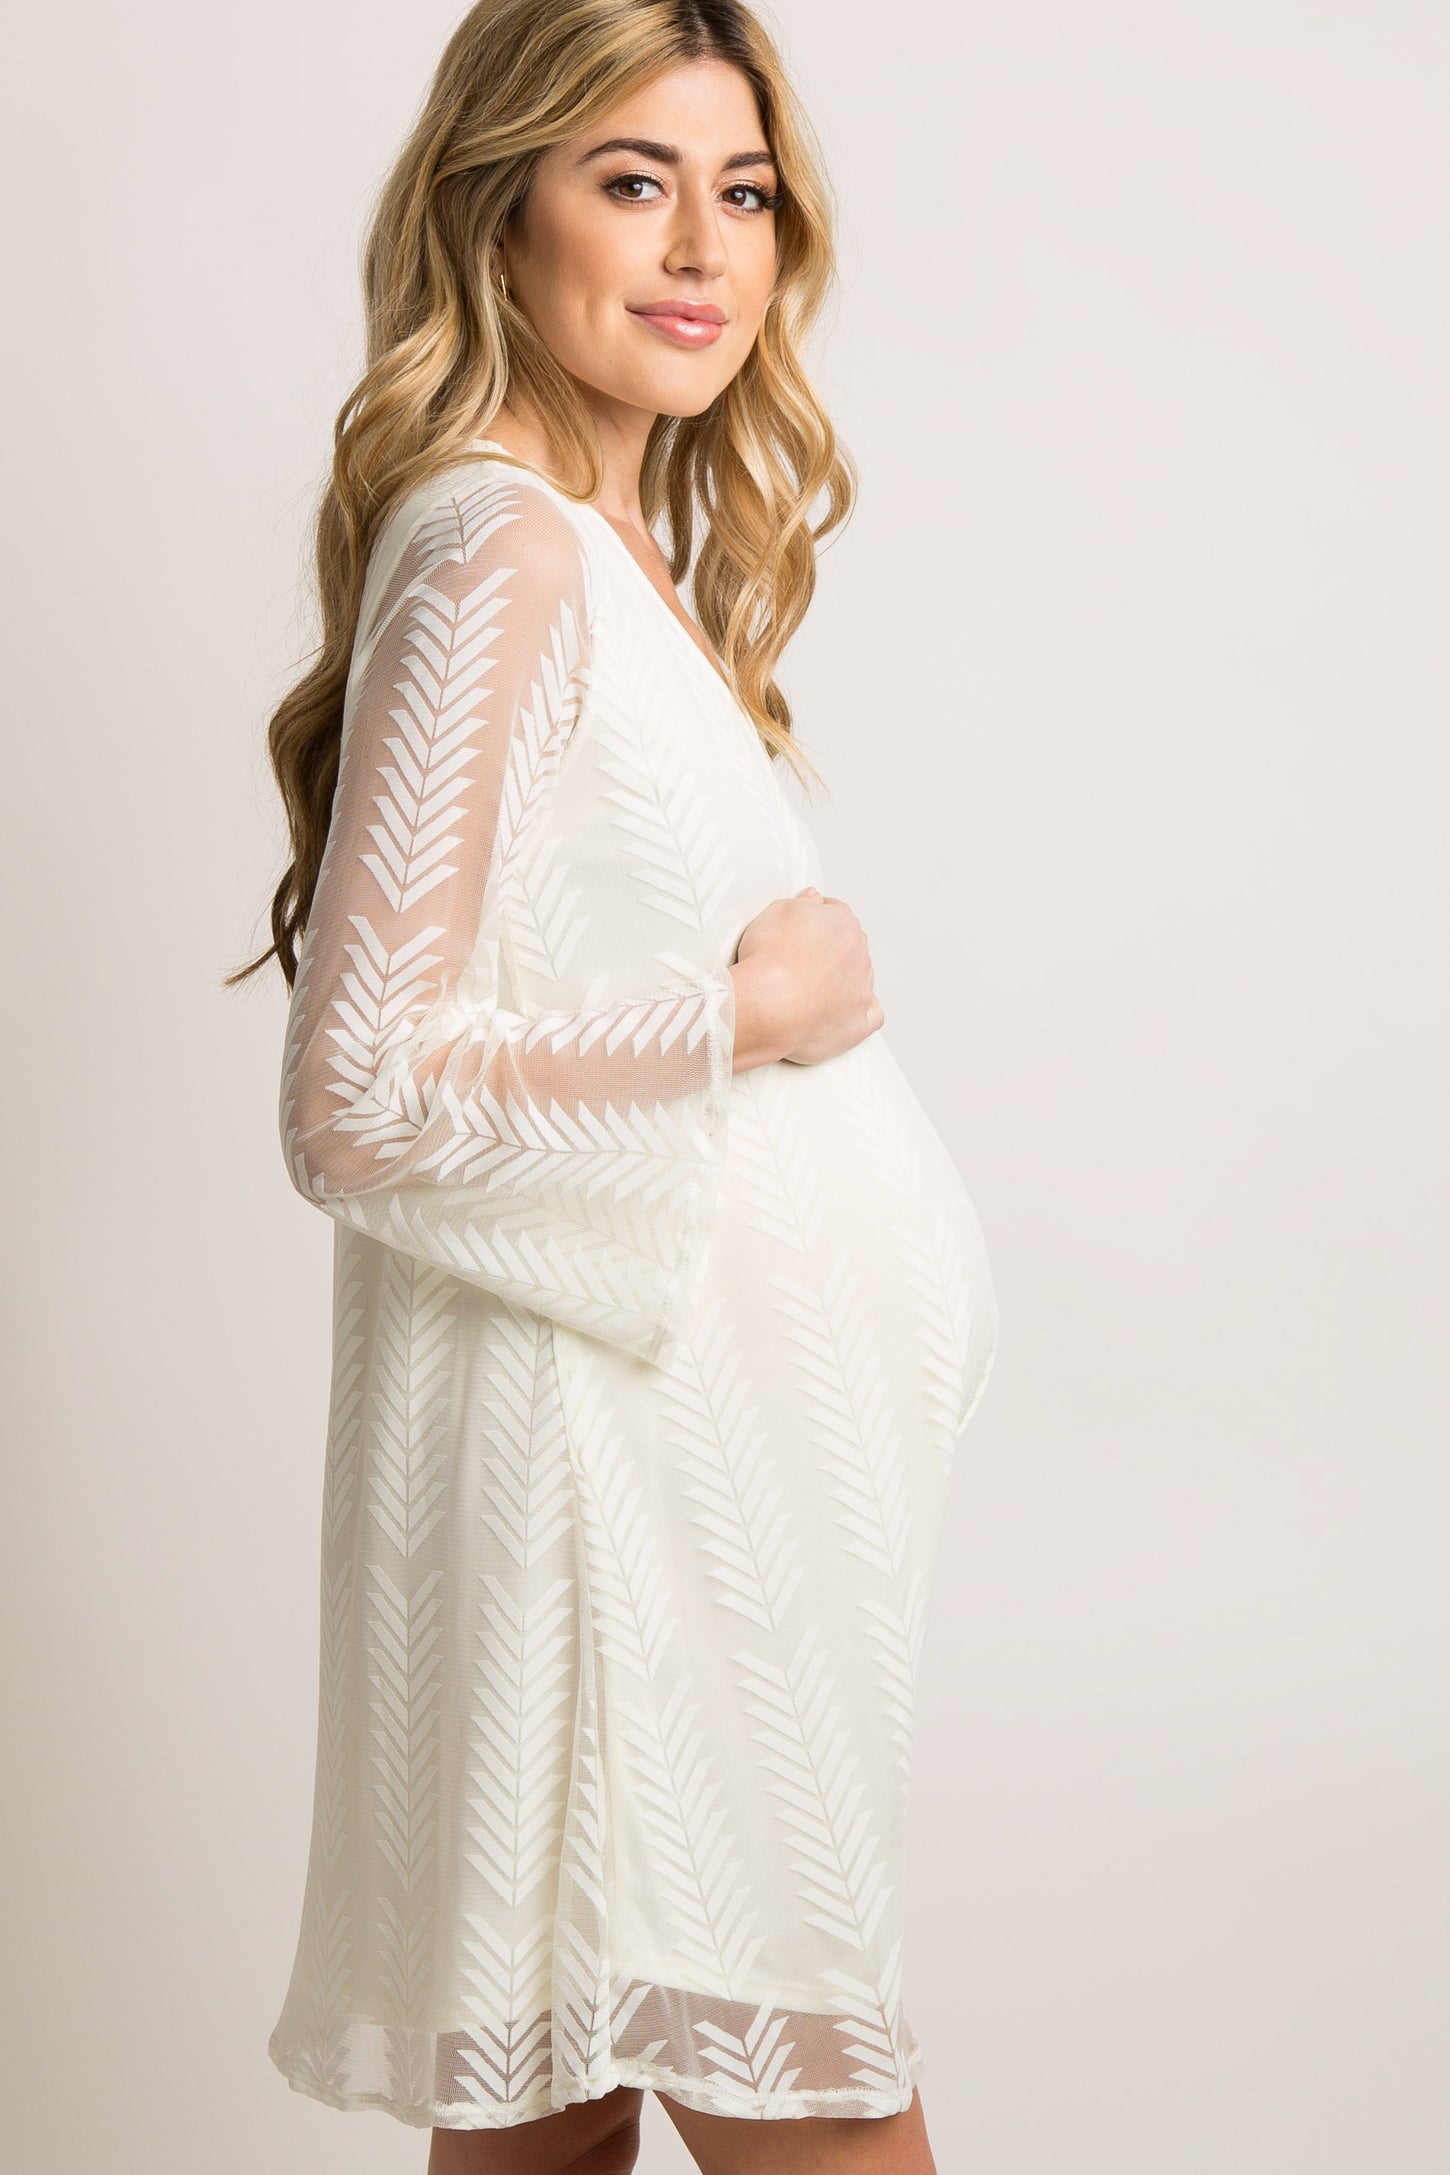 PinkBlush Ivory Chevron Mesh Overlay Maternity Dress